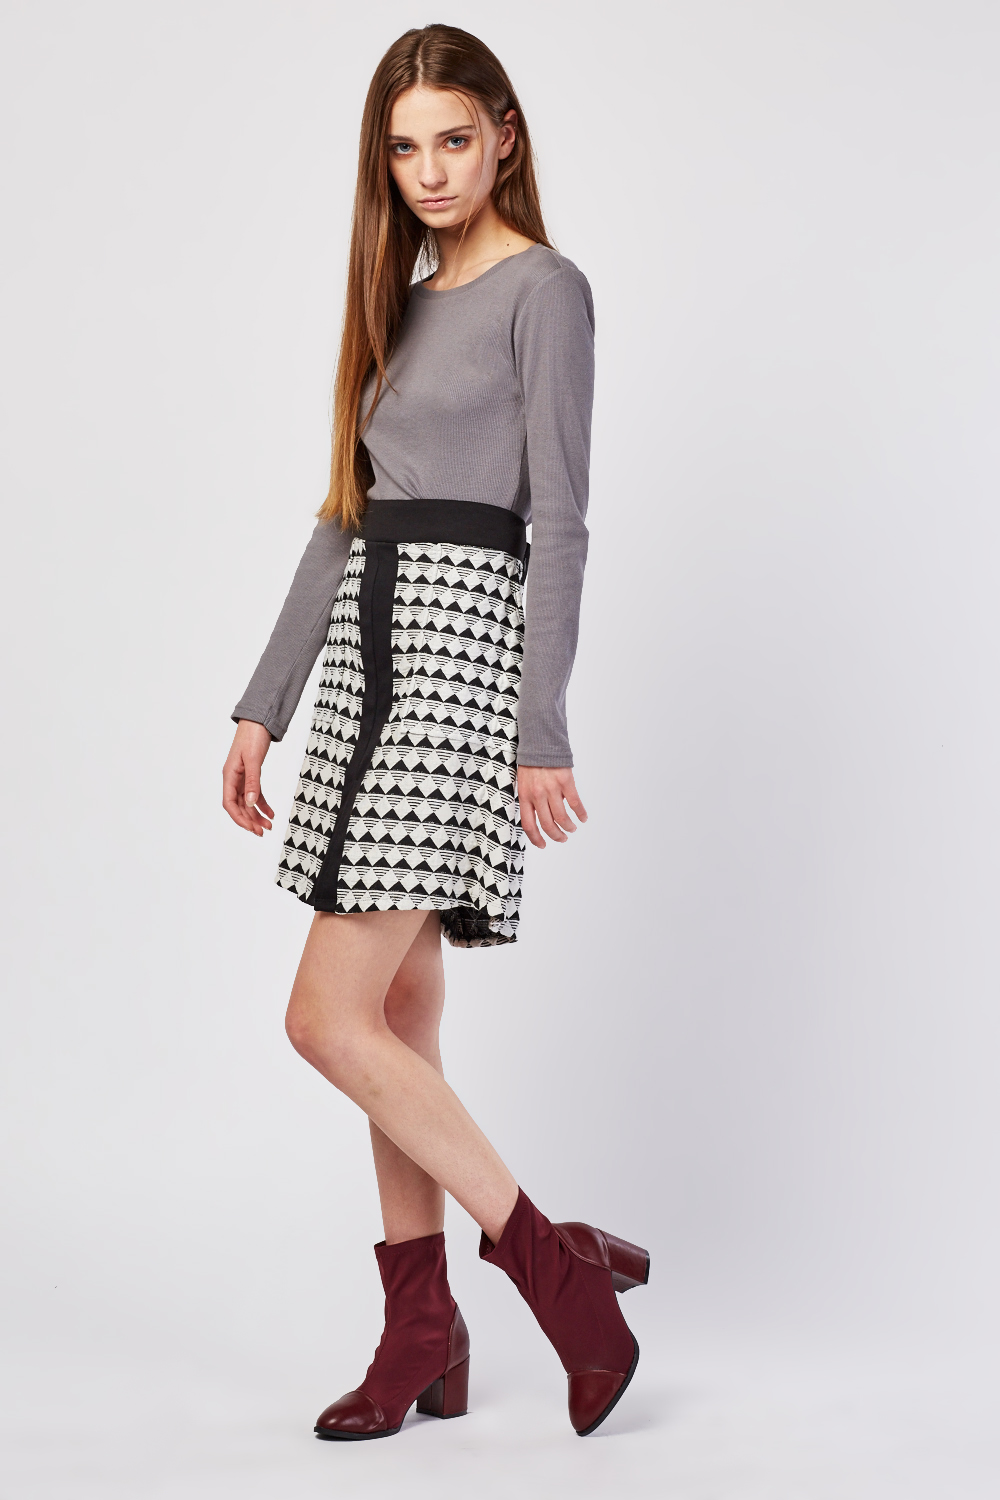 Monochrome Mini Skirt - Just $3